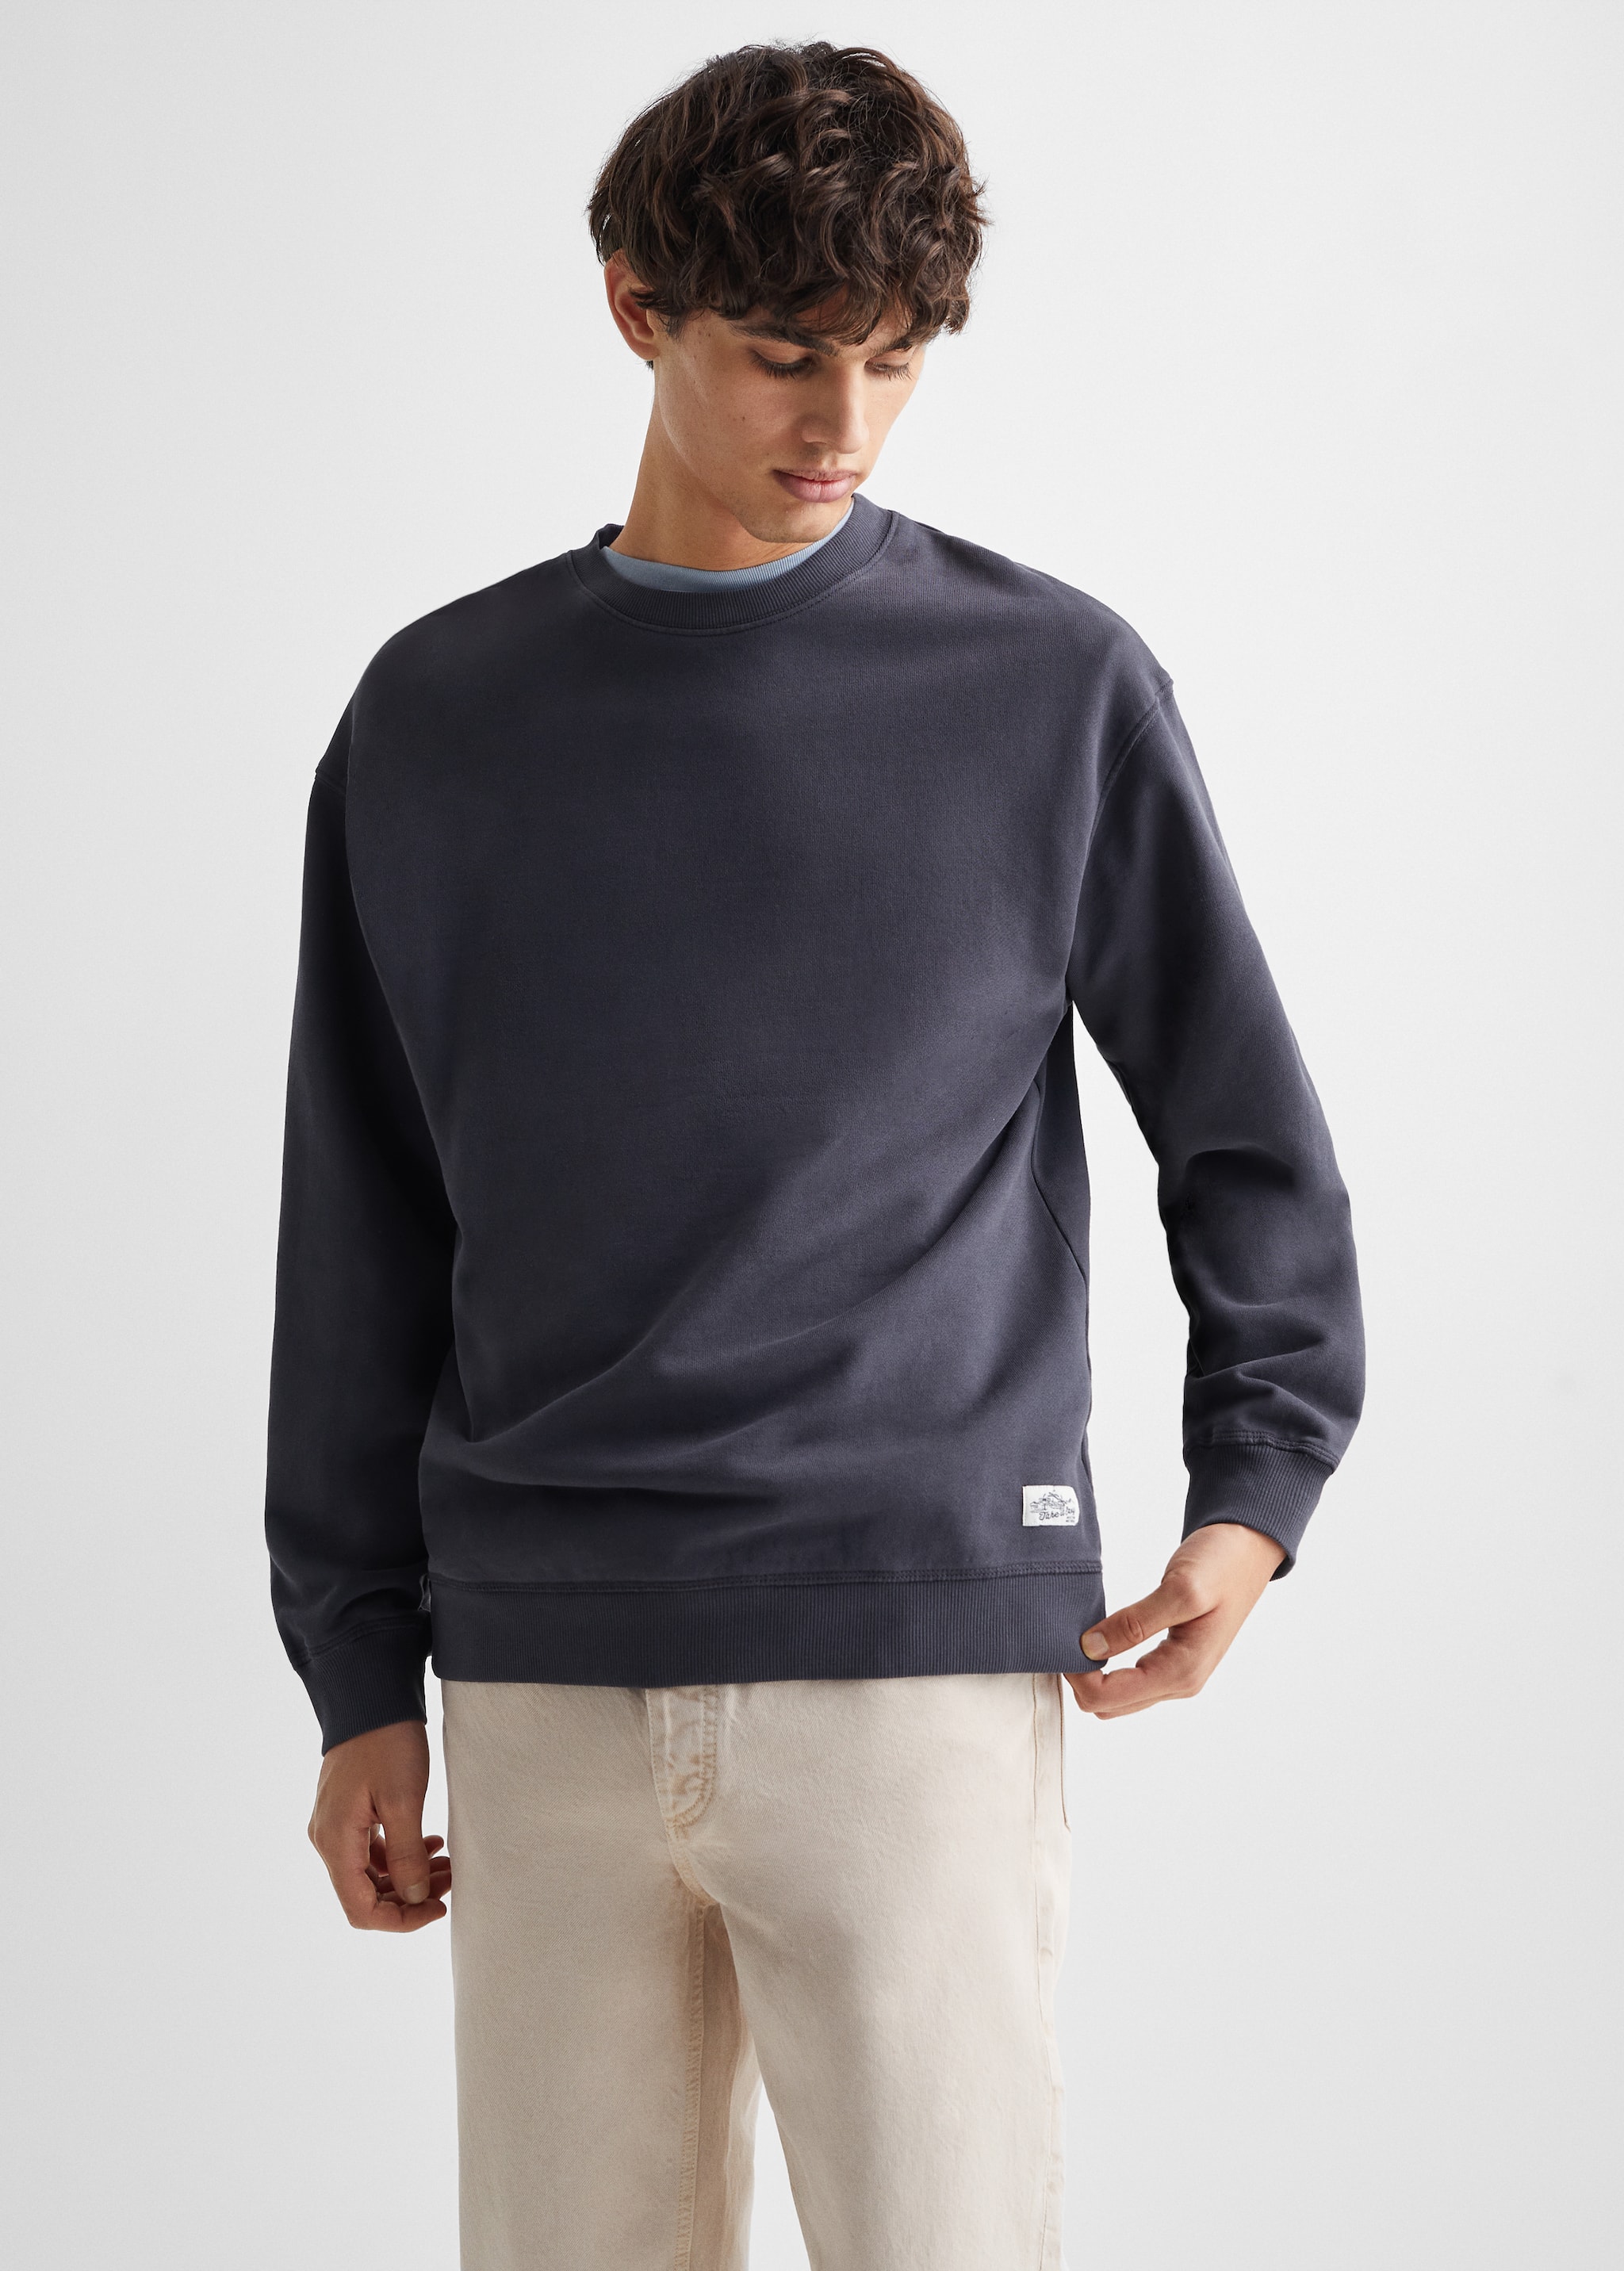 Cotton sweatshirt - Medium plane